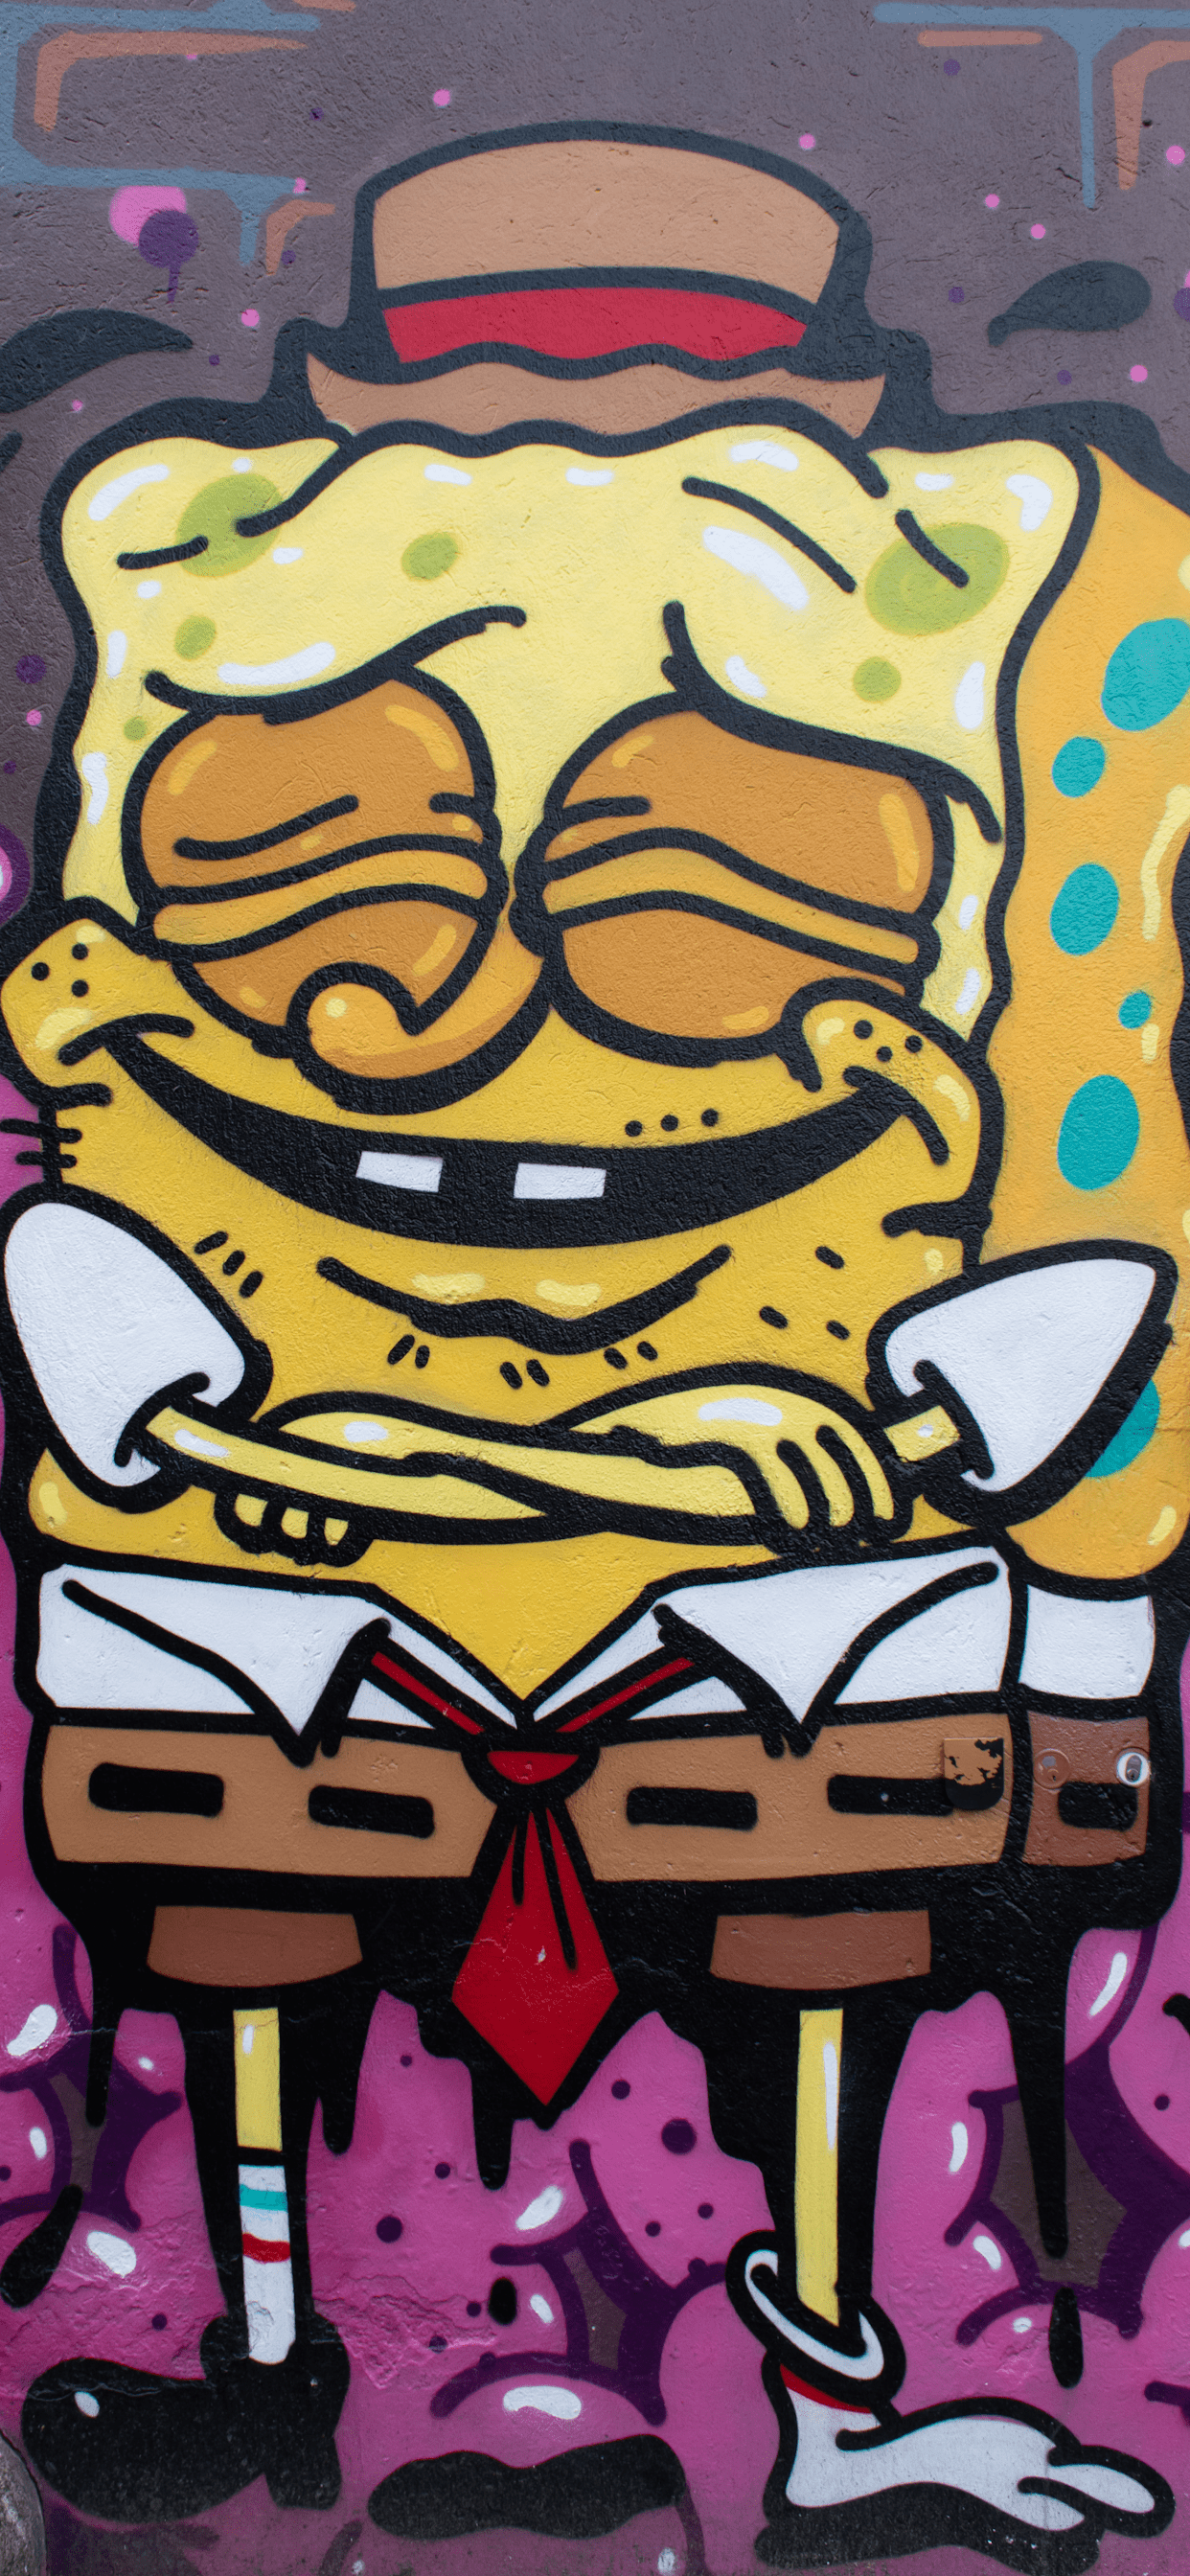 A graffiti painting of SpongeBob SquarePants wearing a hat and a red tie. - Graffiti